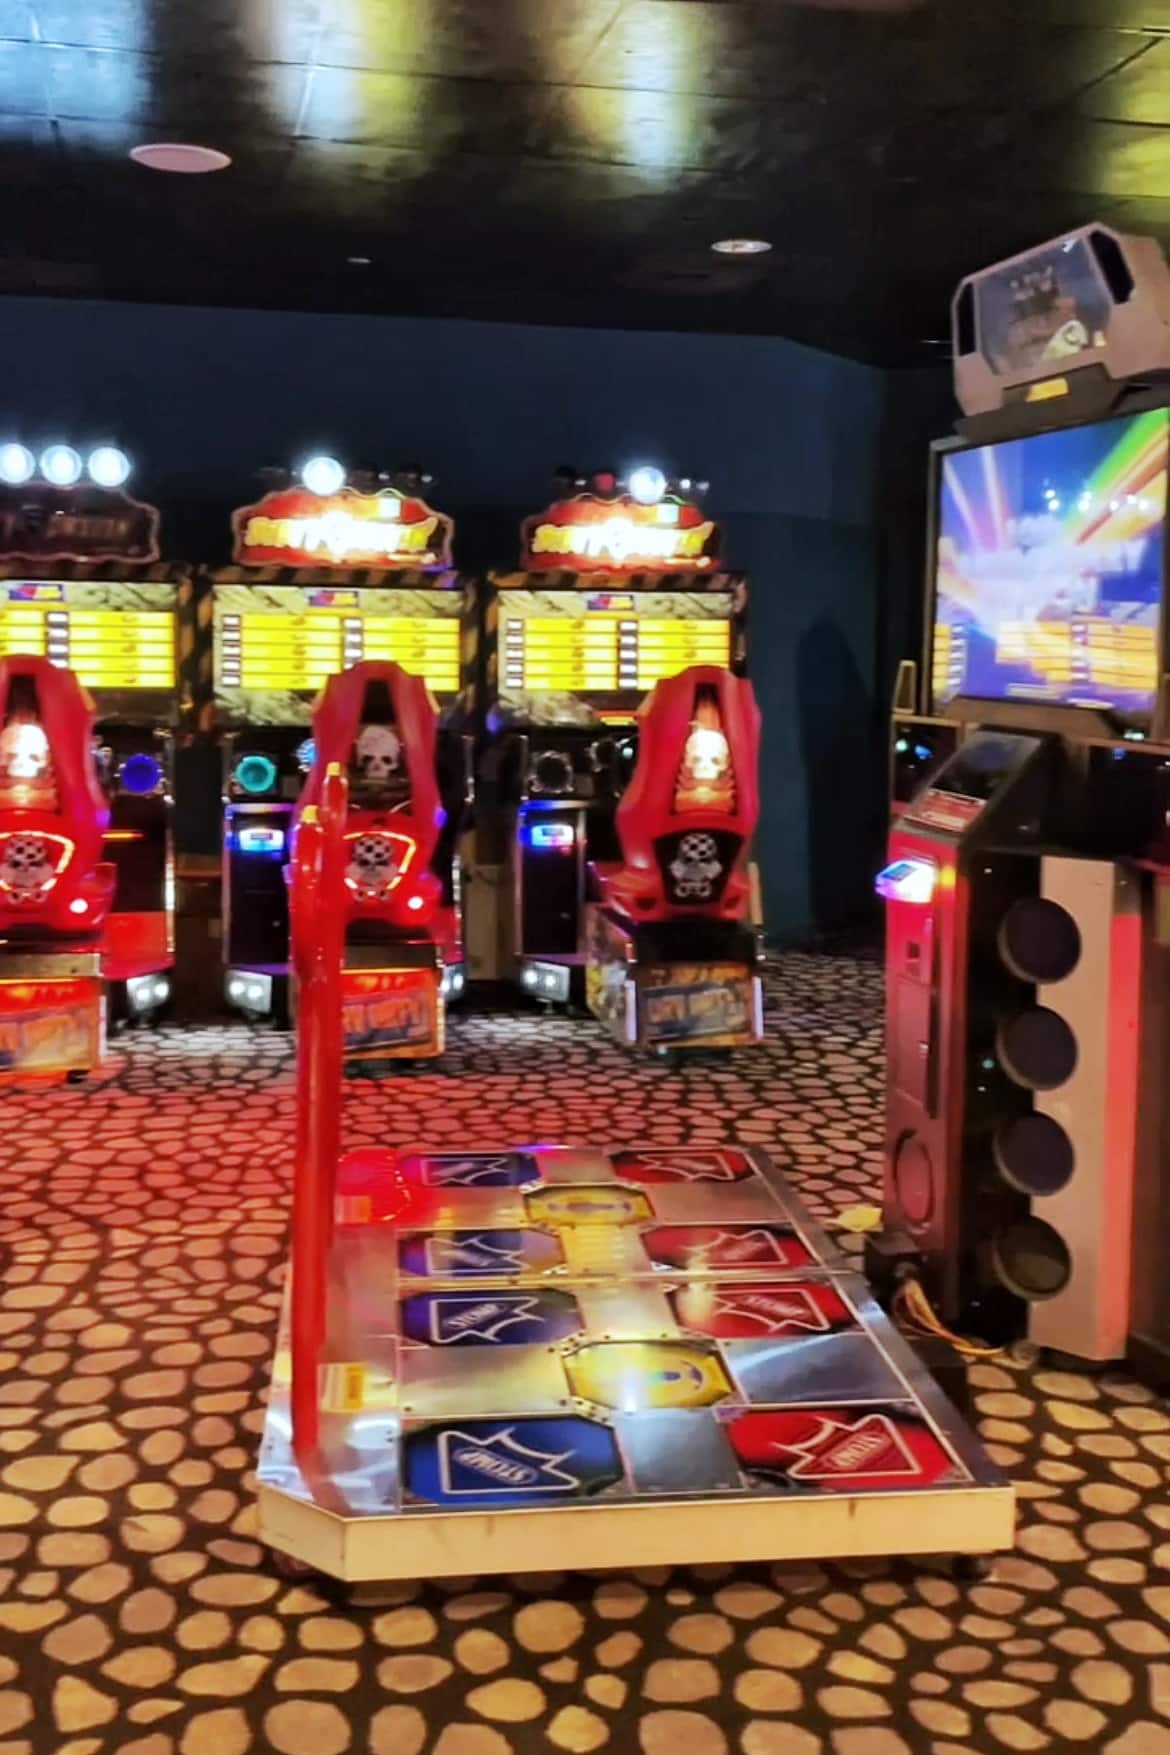 Atlantis for teens and Atlantis for kids - Gamer's Reef Arcade